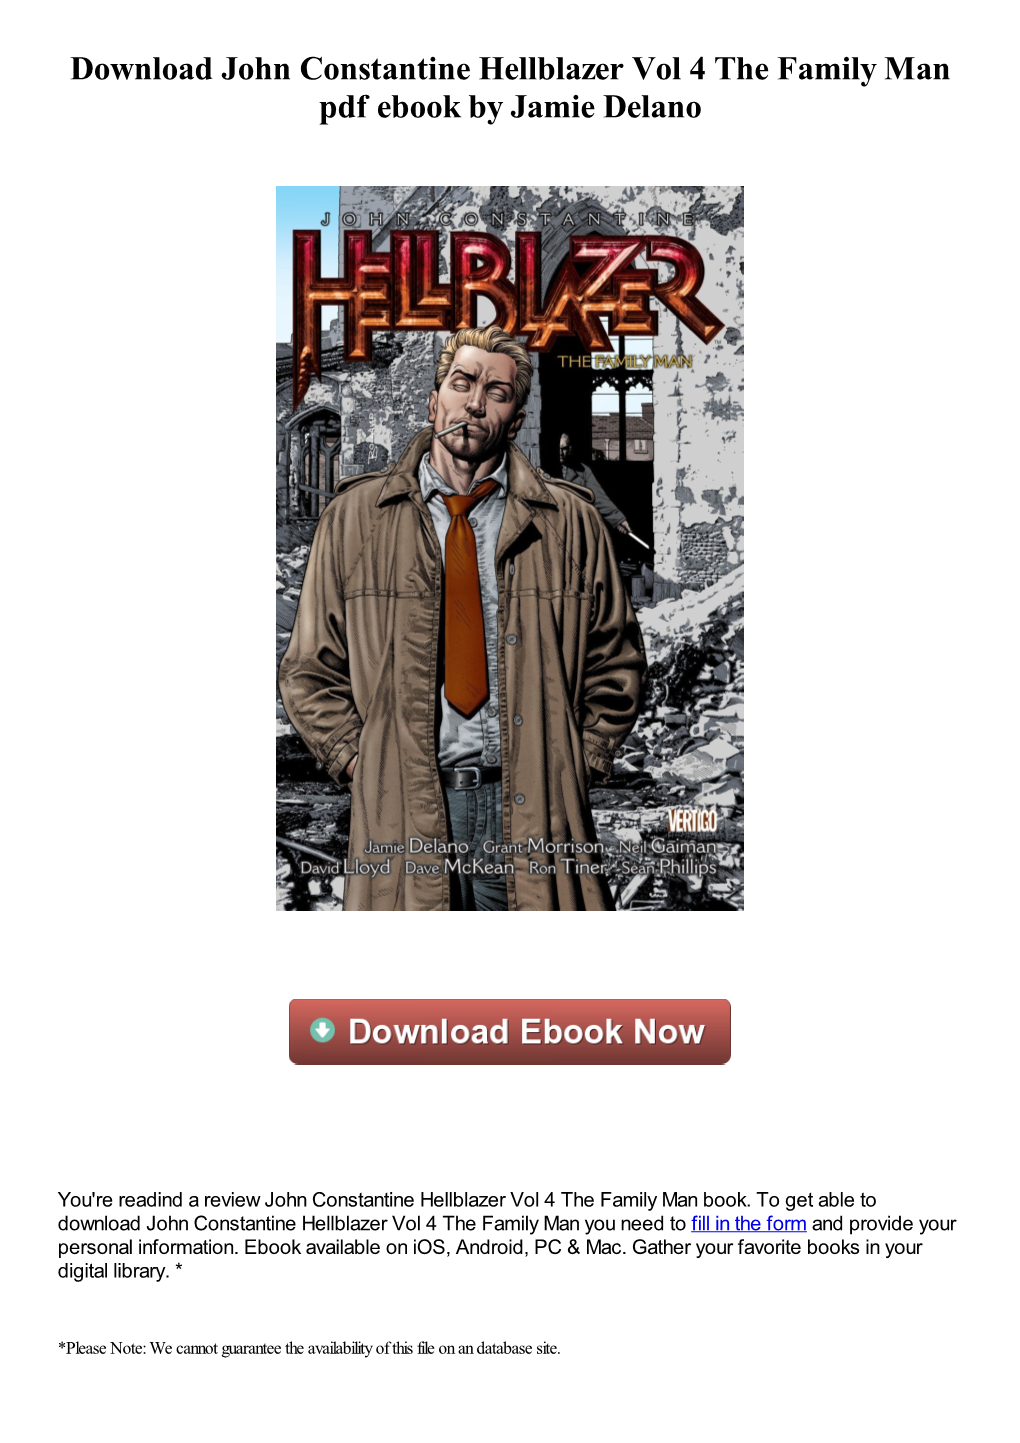 Download John Constantine Hellblazer Vol 4 the Family Man Pdf Ebook by Jamie Delano